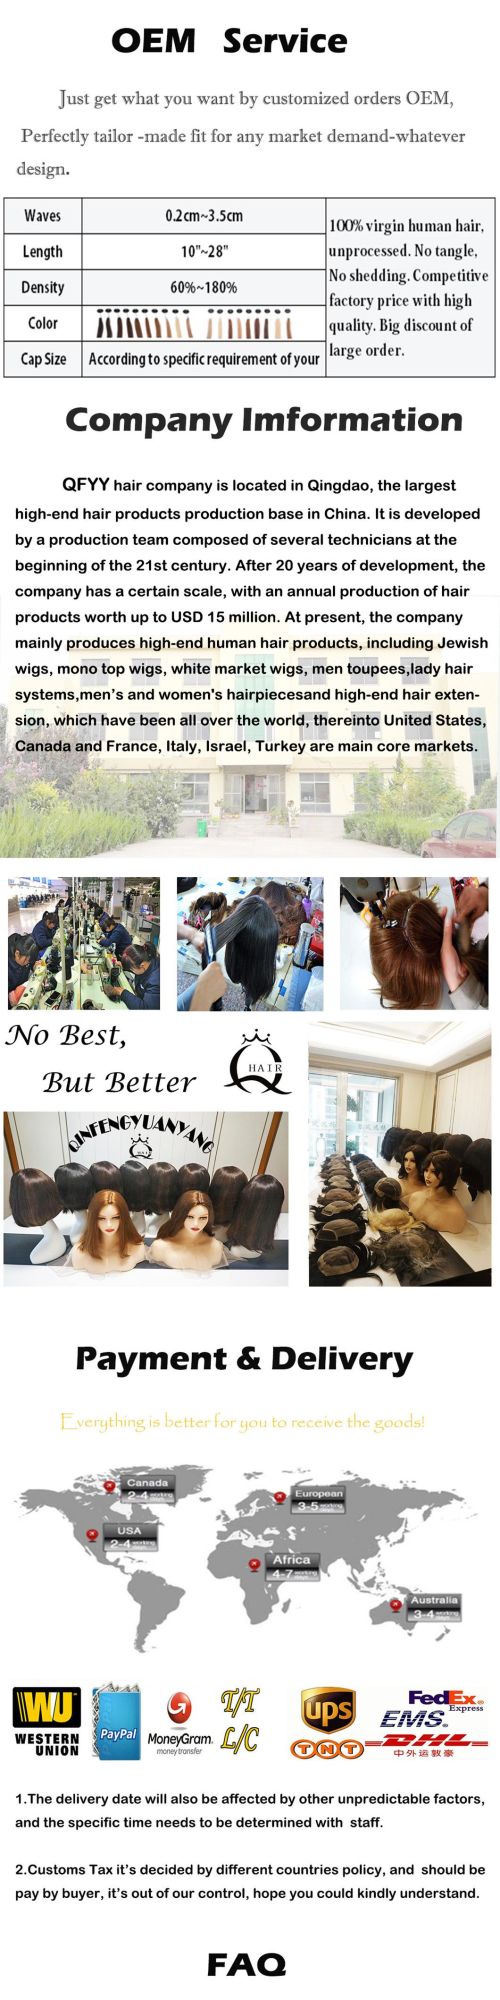 Slight Layer Natural Light Black Color Wave Silk Top Kosher Jewish Orthodox Religion Human Hair Wig for Kosher Women